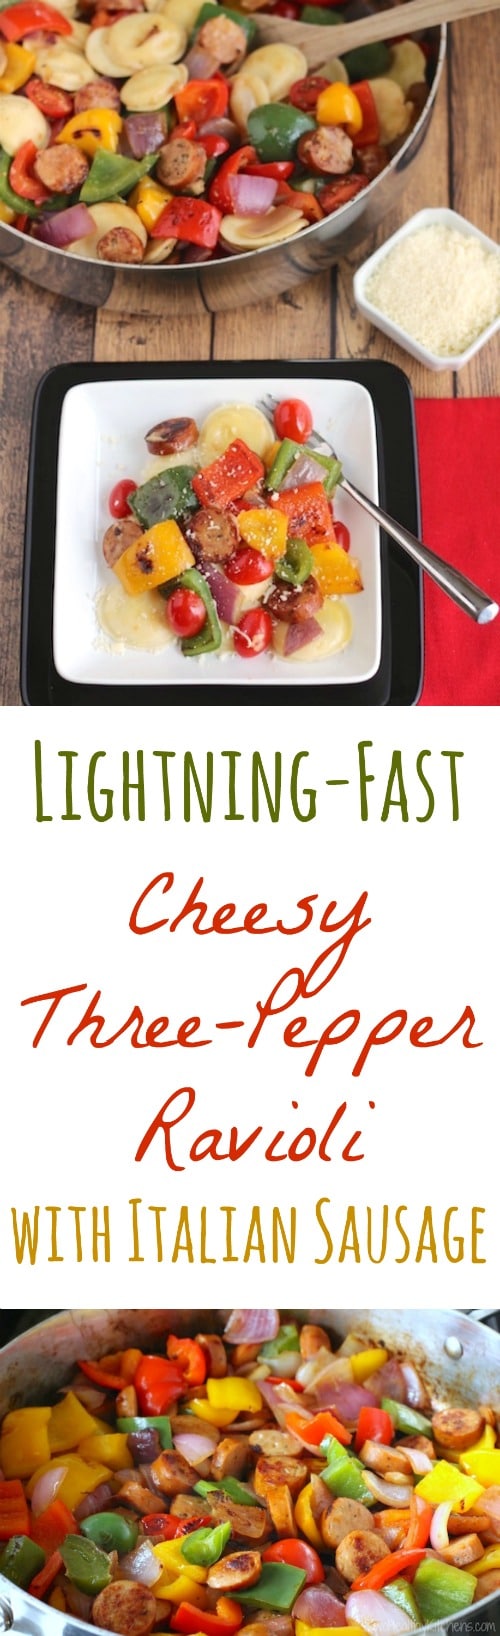 Lightning-Fast Cheesy Three-Pepper Ravioli with Italian Sausage Recipe {www.TwoHealthyKitchens.com}